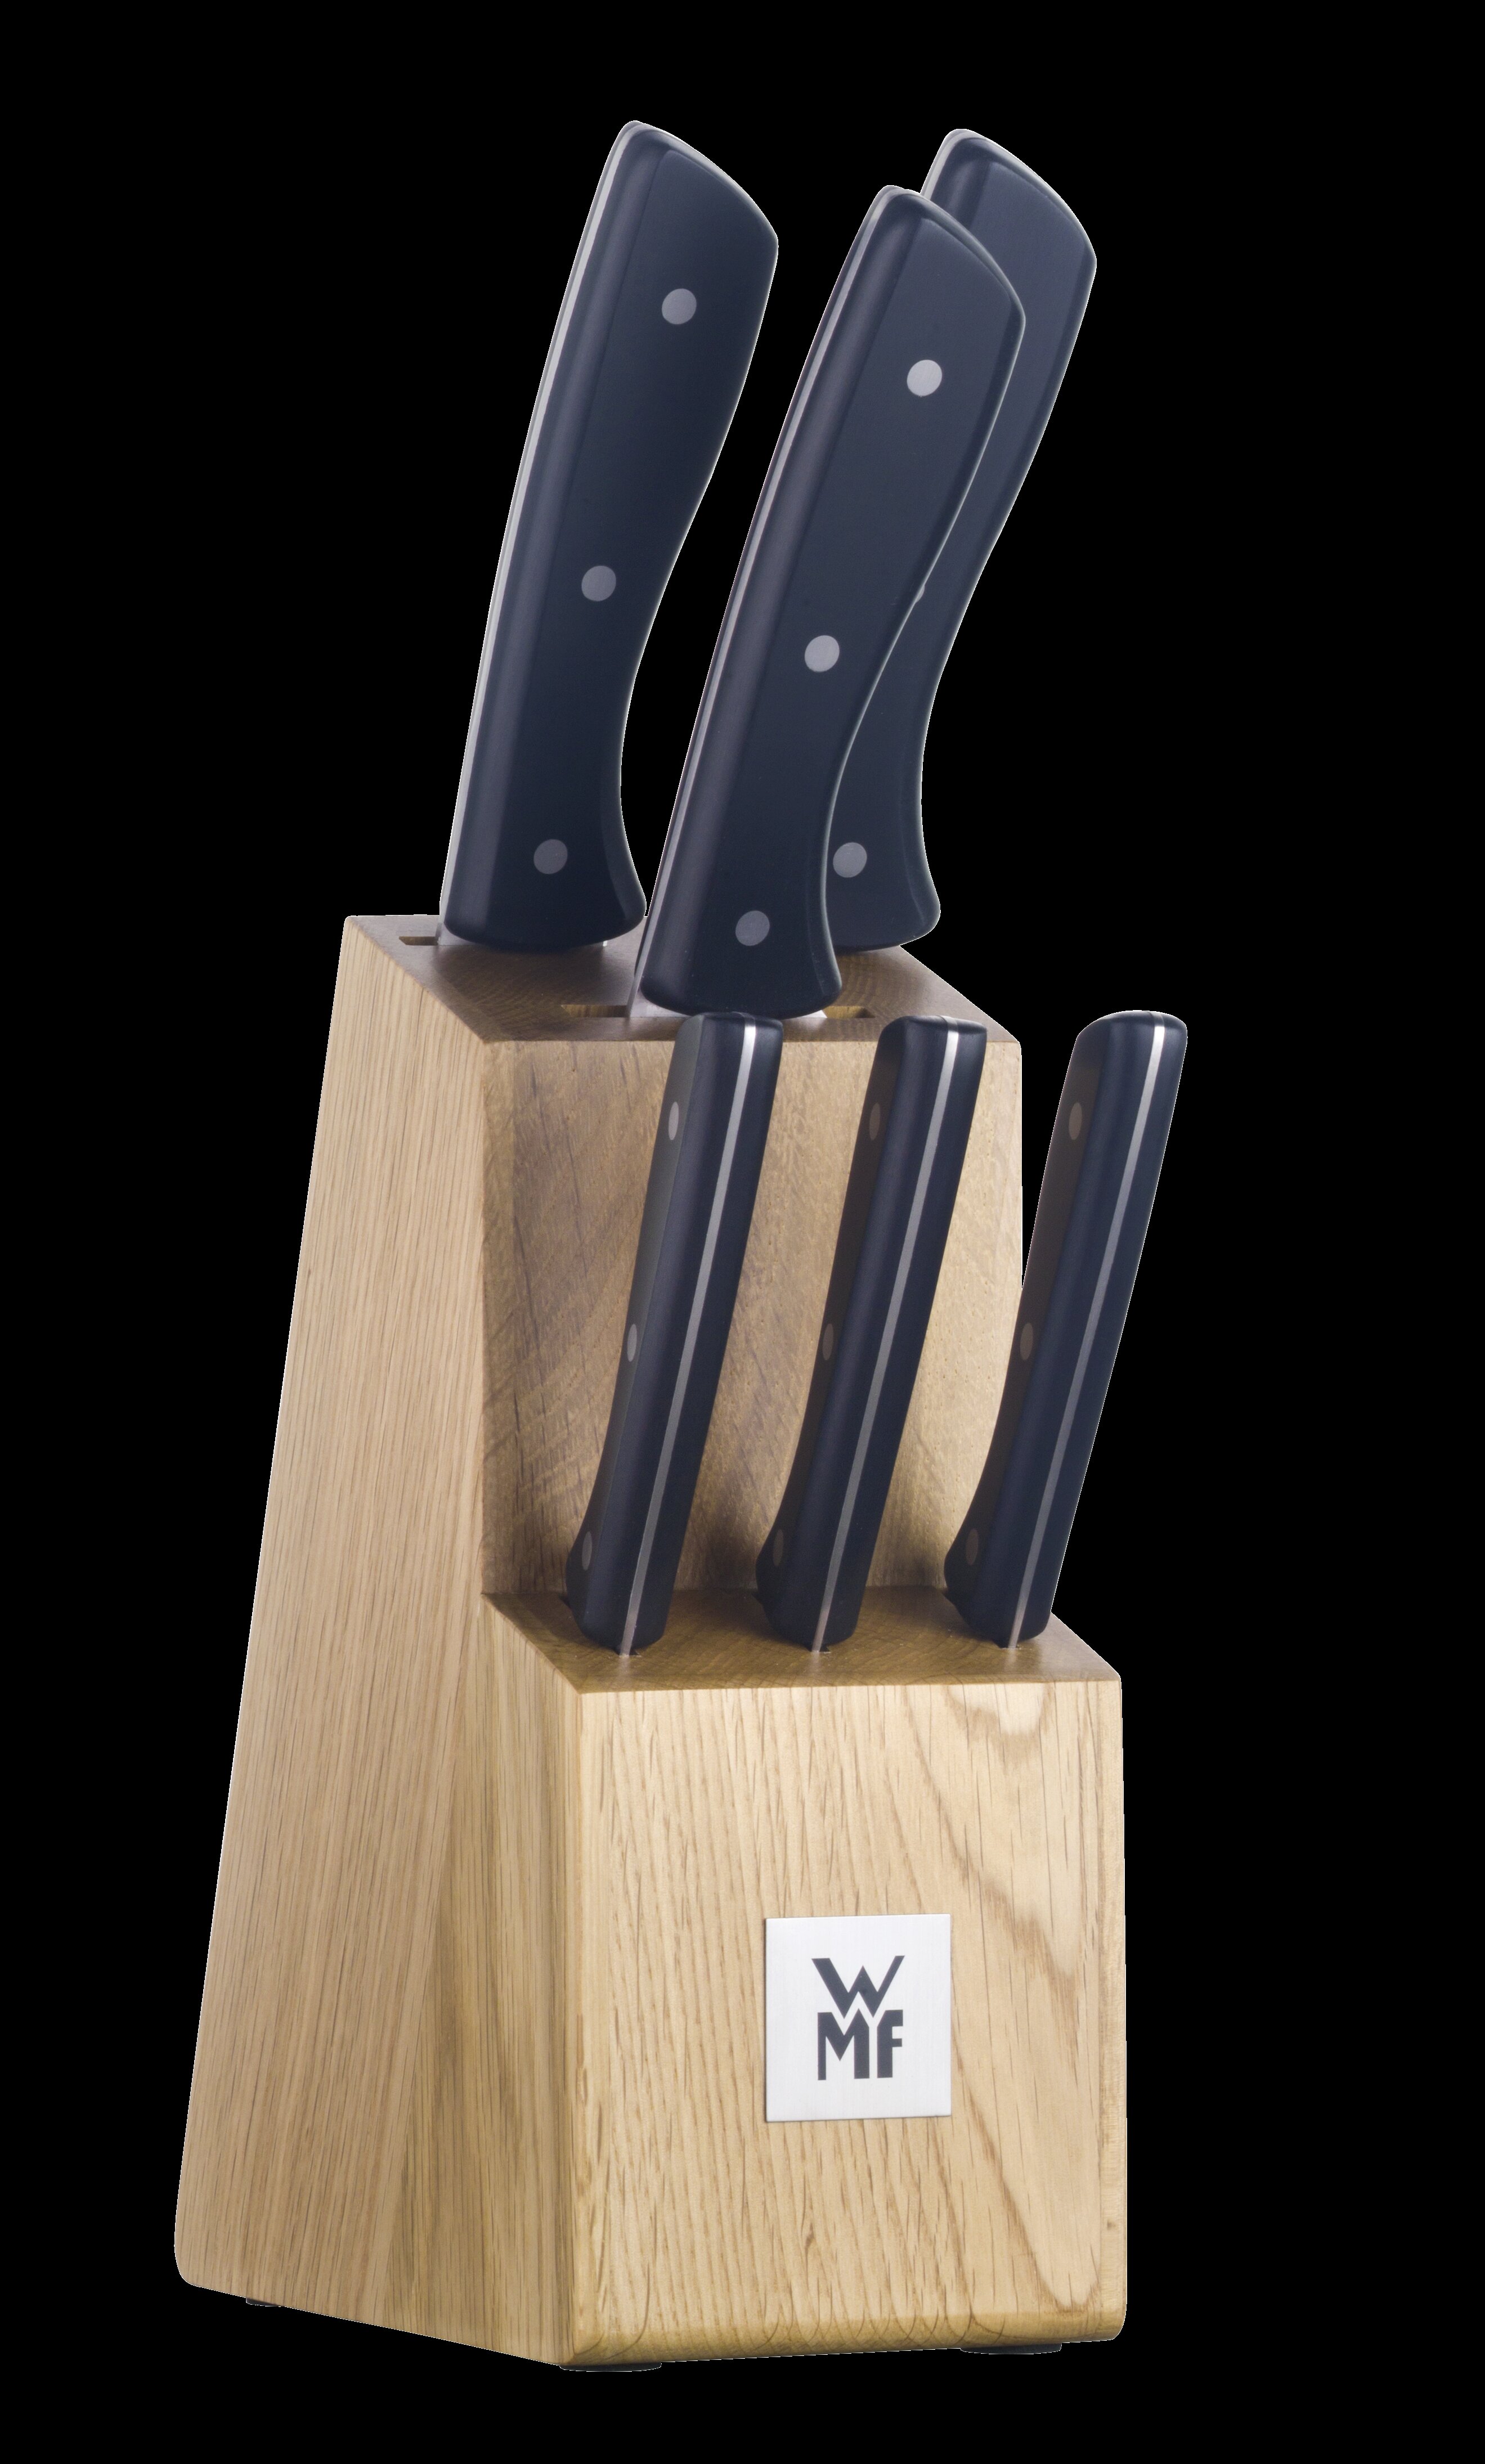 WMF geschmiedet mit 7-tlg. Messerblock Messerset